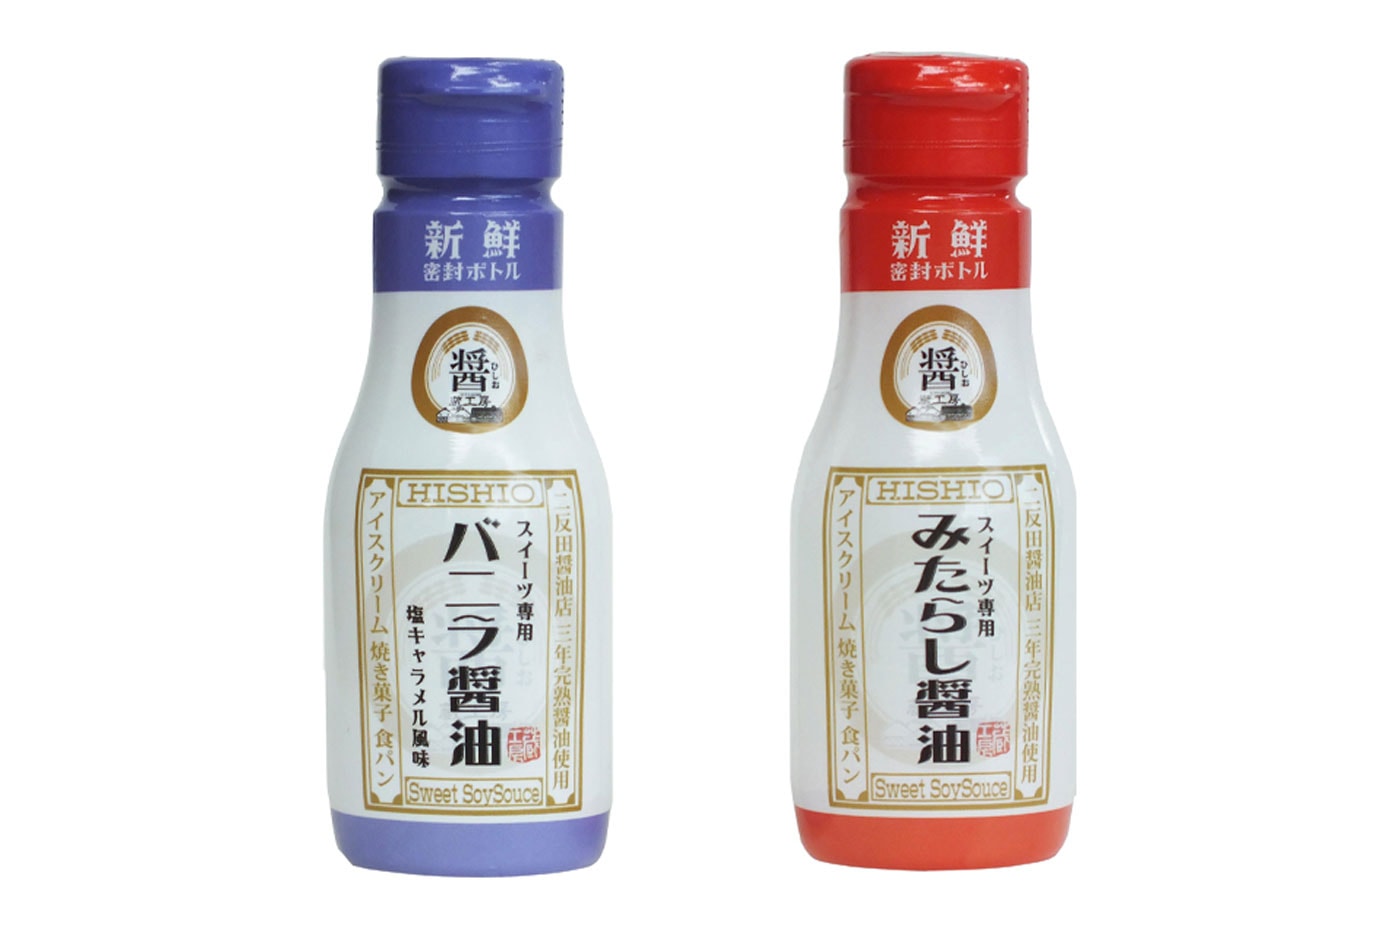 Nitanda Shoyuten Sweet Soy Sauce For Dessert Info food & beverage Japan vanilla mitarashi mirin brown sugar